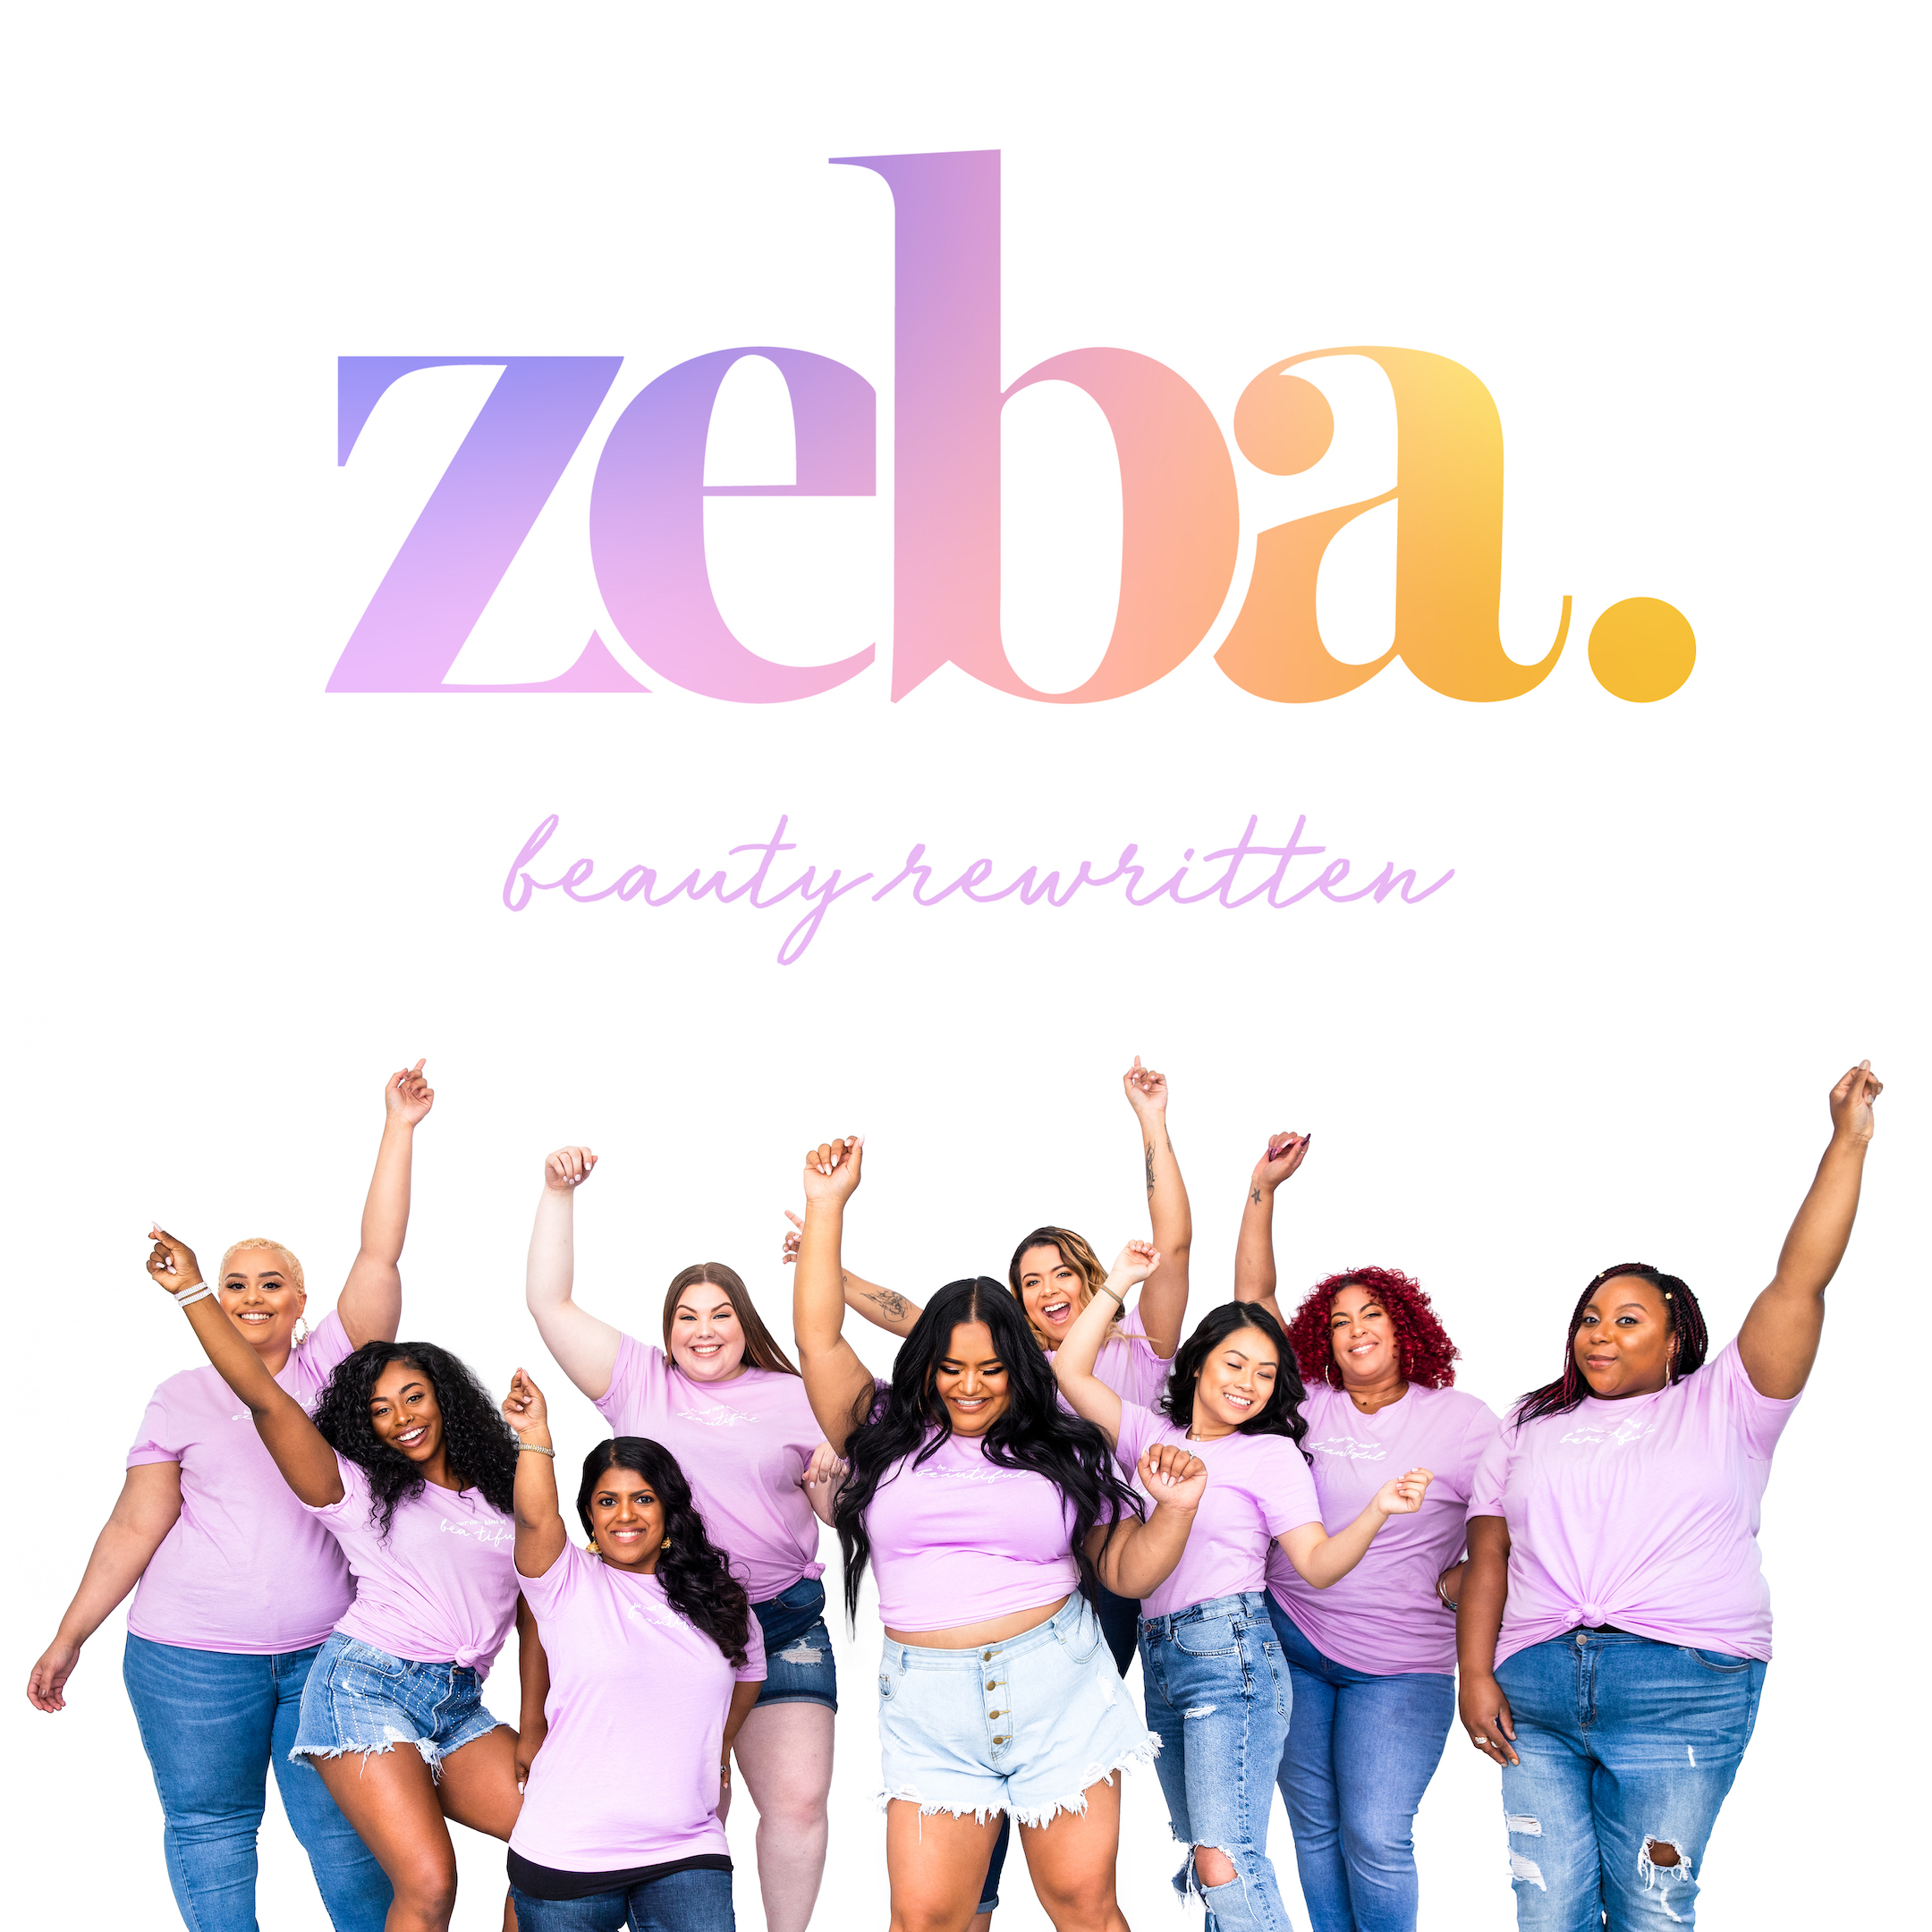 ZEBA, Beauty Redefined